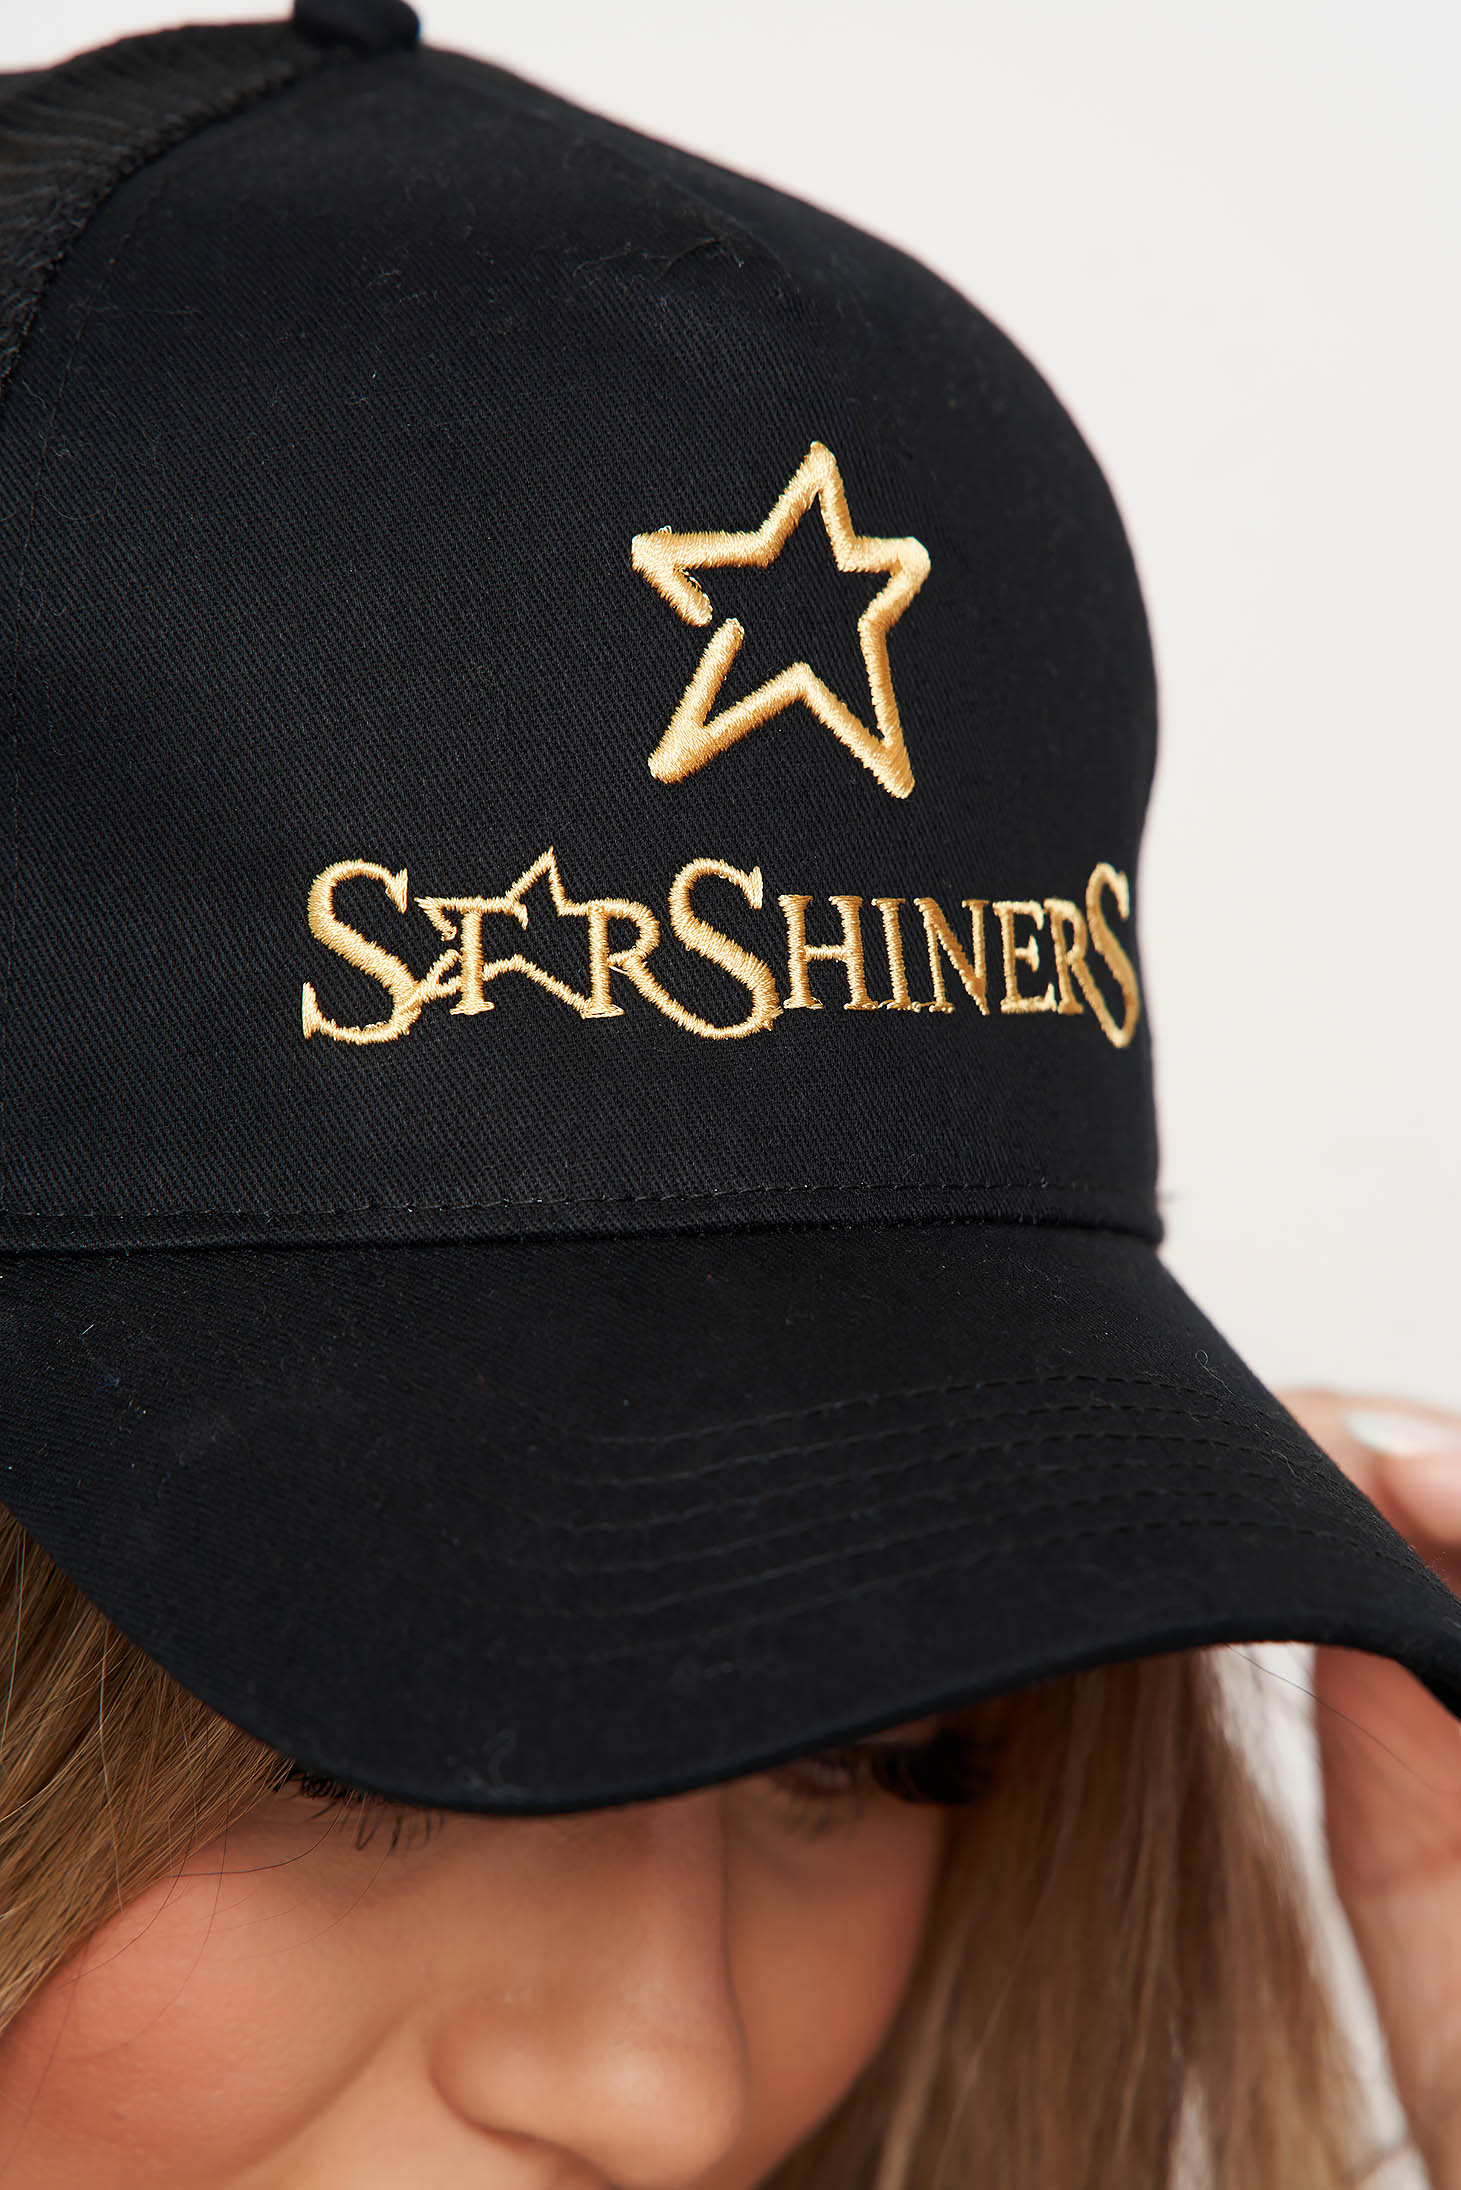 StarShinerS Women's Black Cap with Custom Embroidery 1 - StarShinerS.com